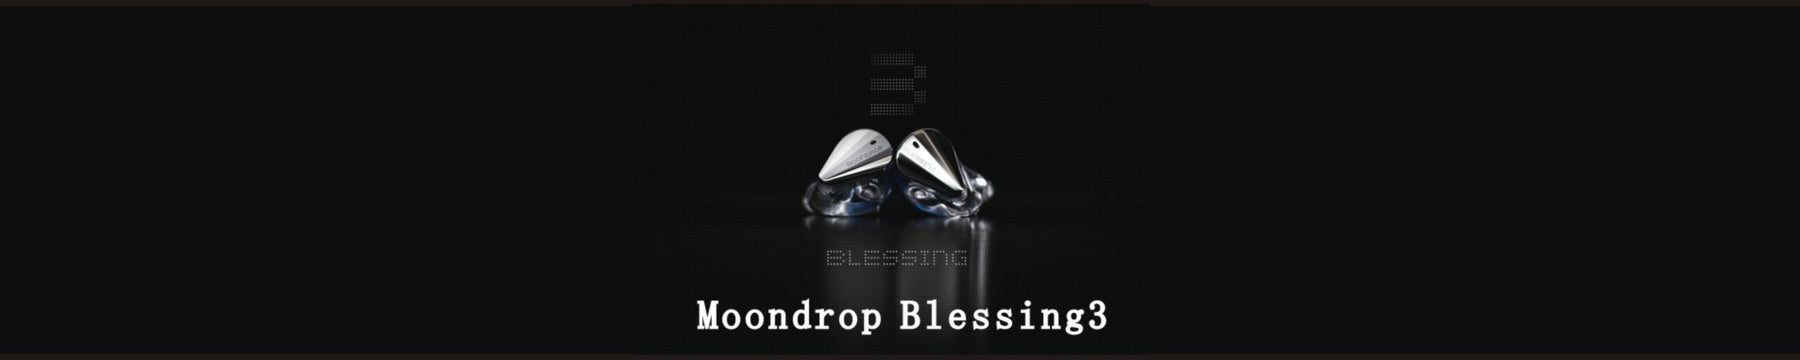 Moondrop Blessing 3 : Latest 4BA+2DD Advanced Hybrid IEMs